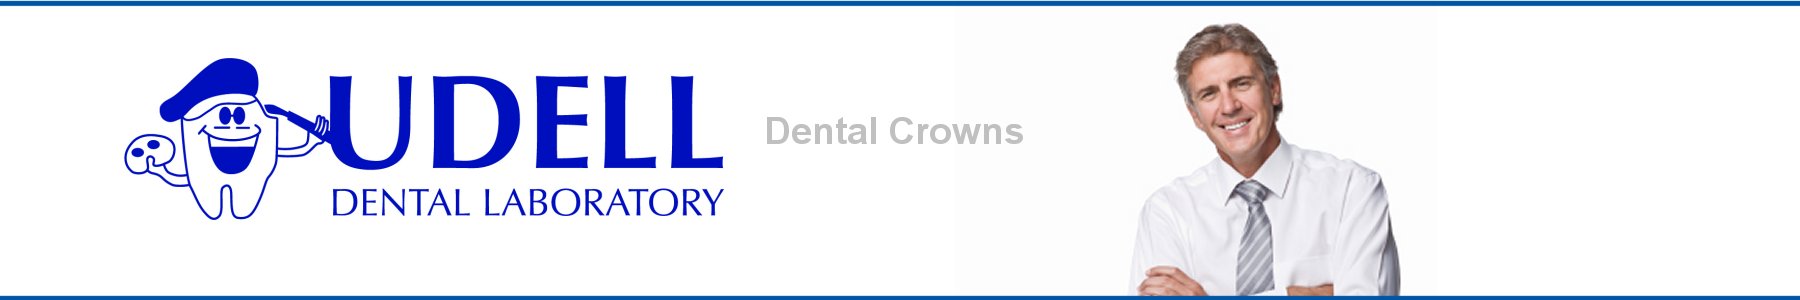 Udell Dental Laboratory Crowns